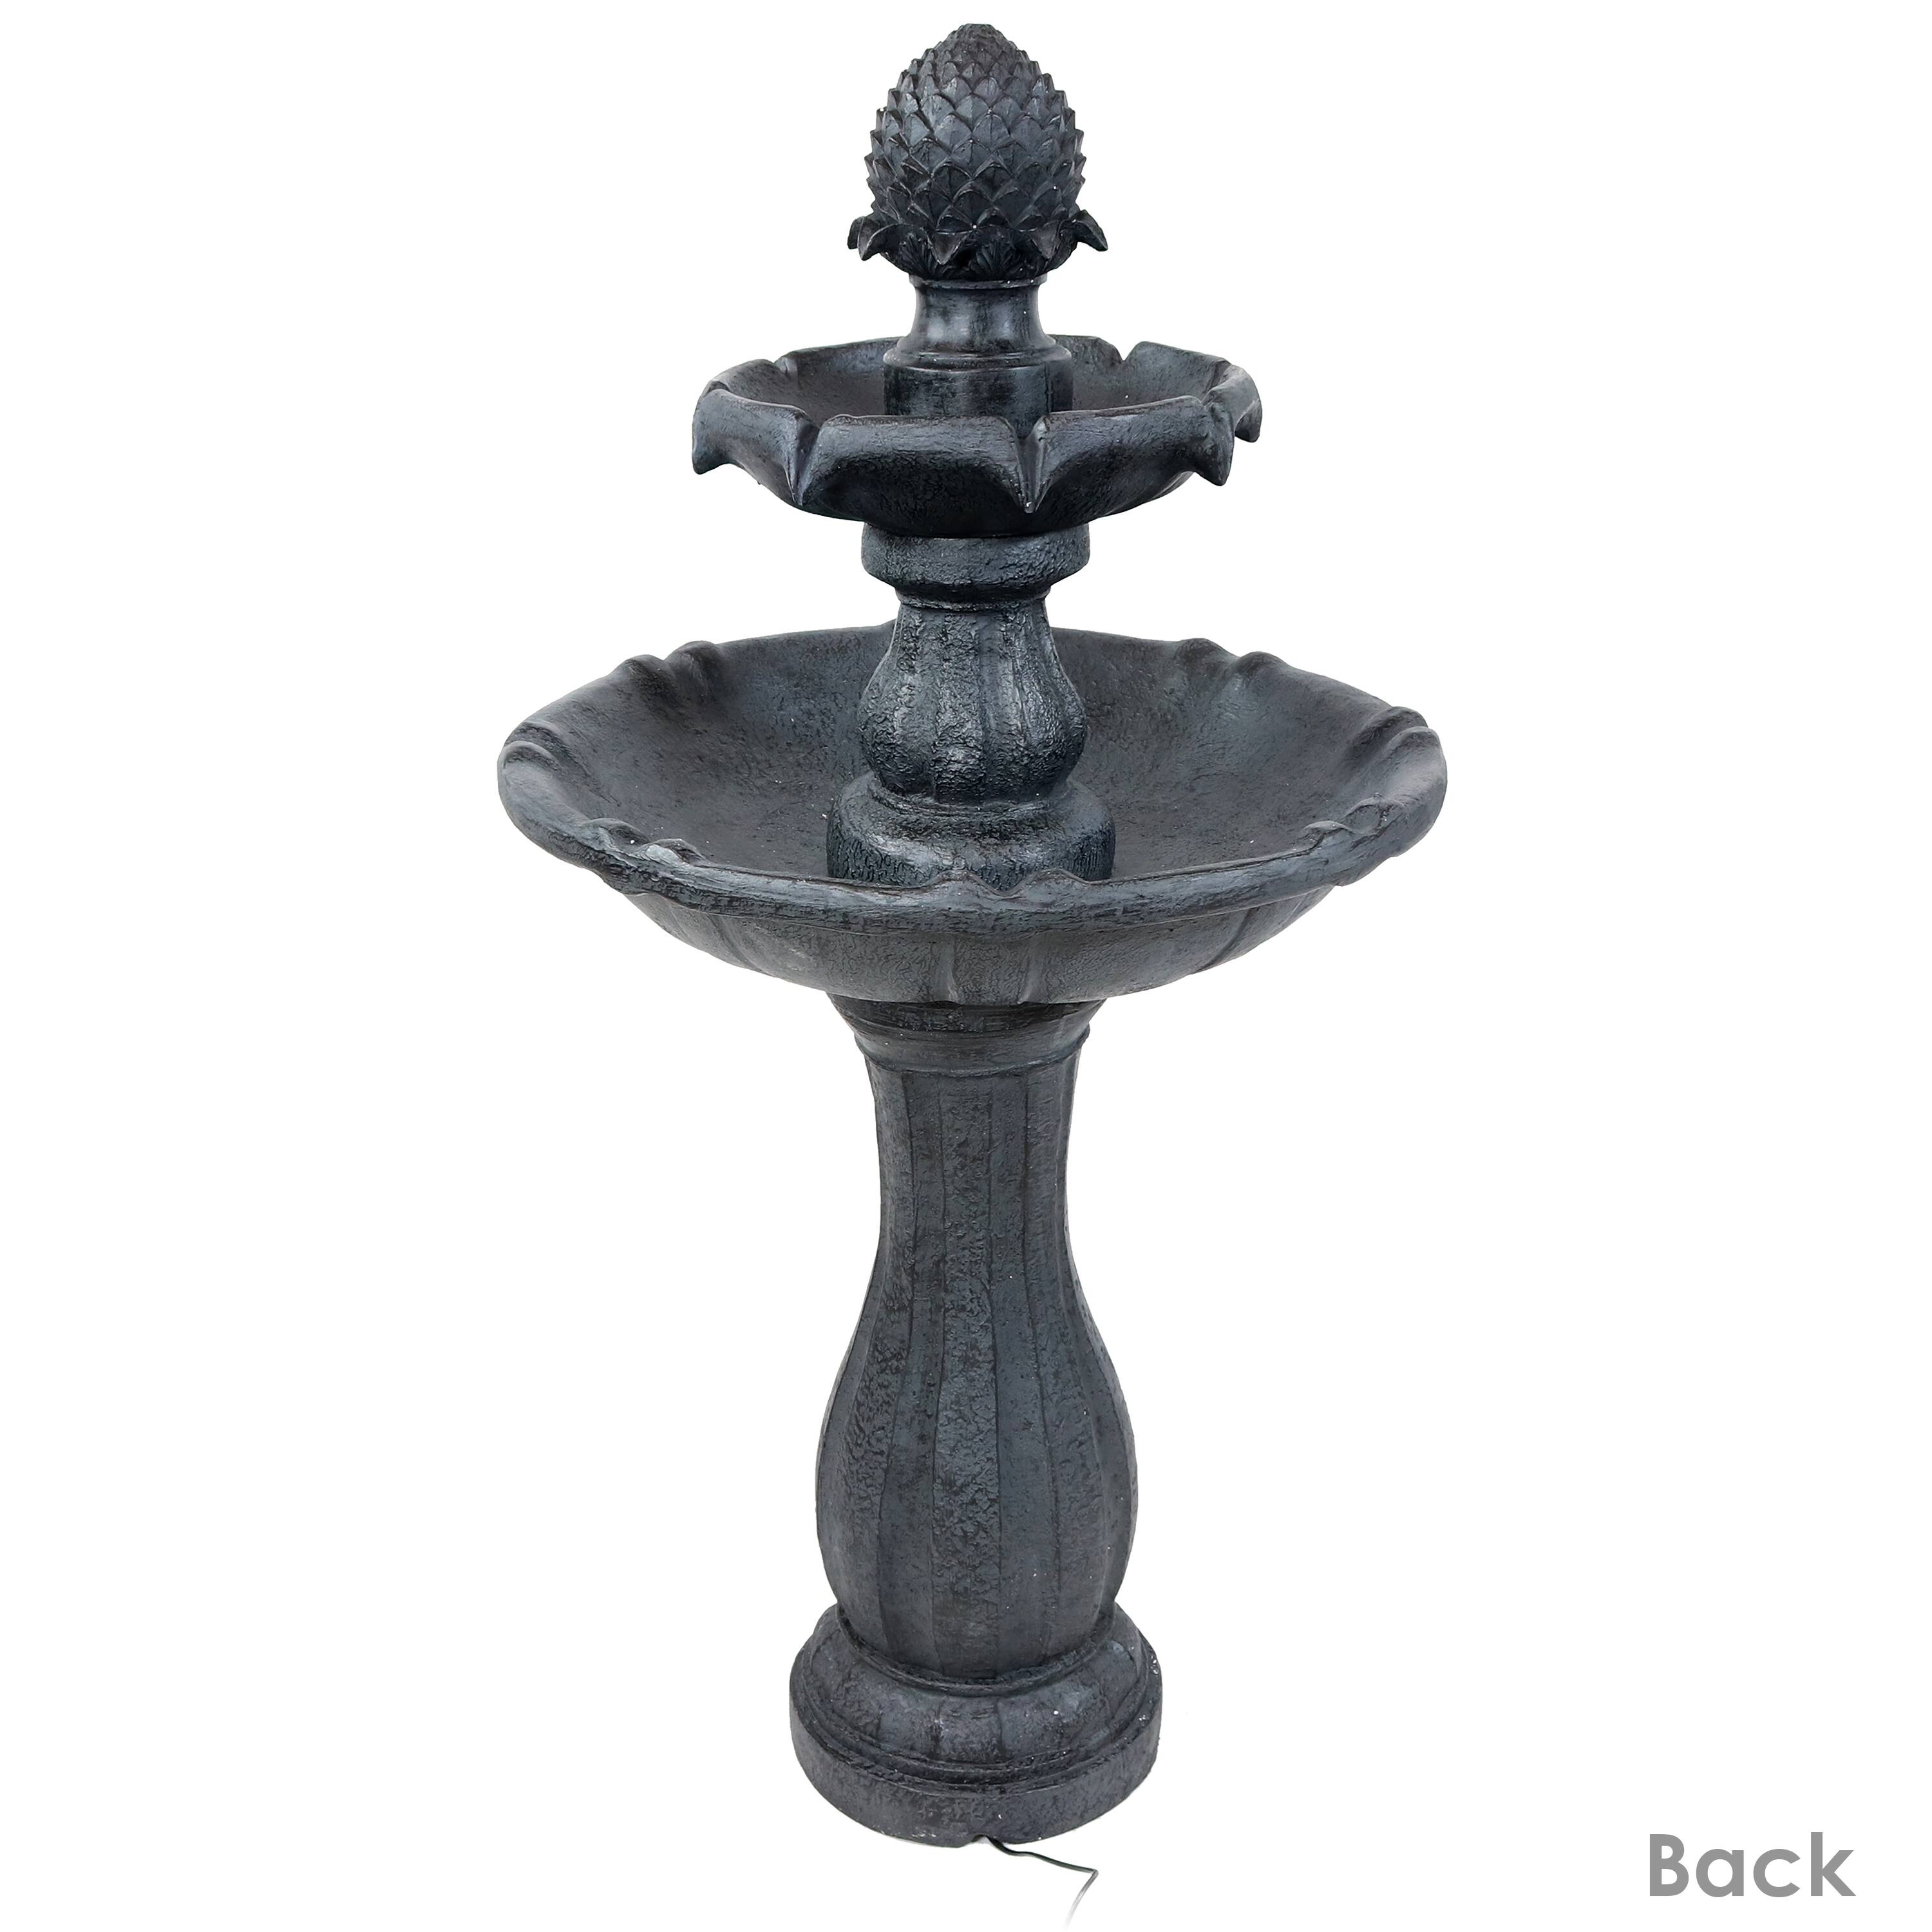 2-Tier Pineapple Solar Outdoor Water Fountain w/ Battery - 46" - Black